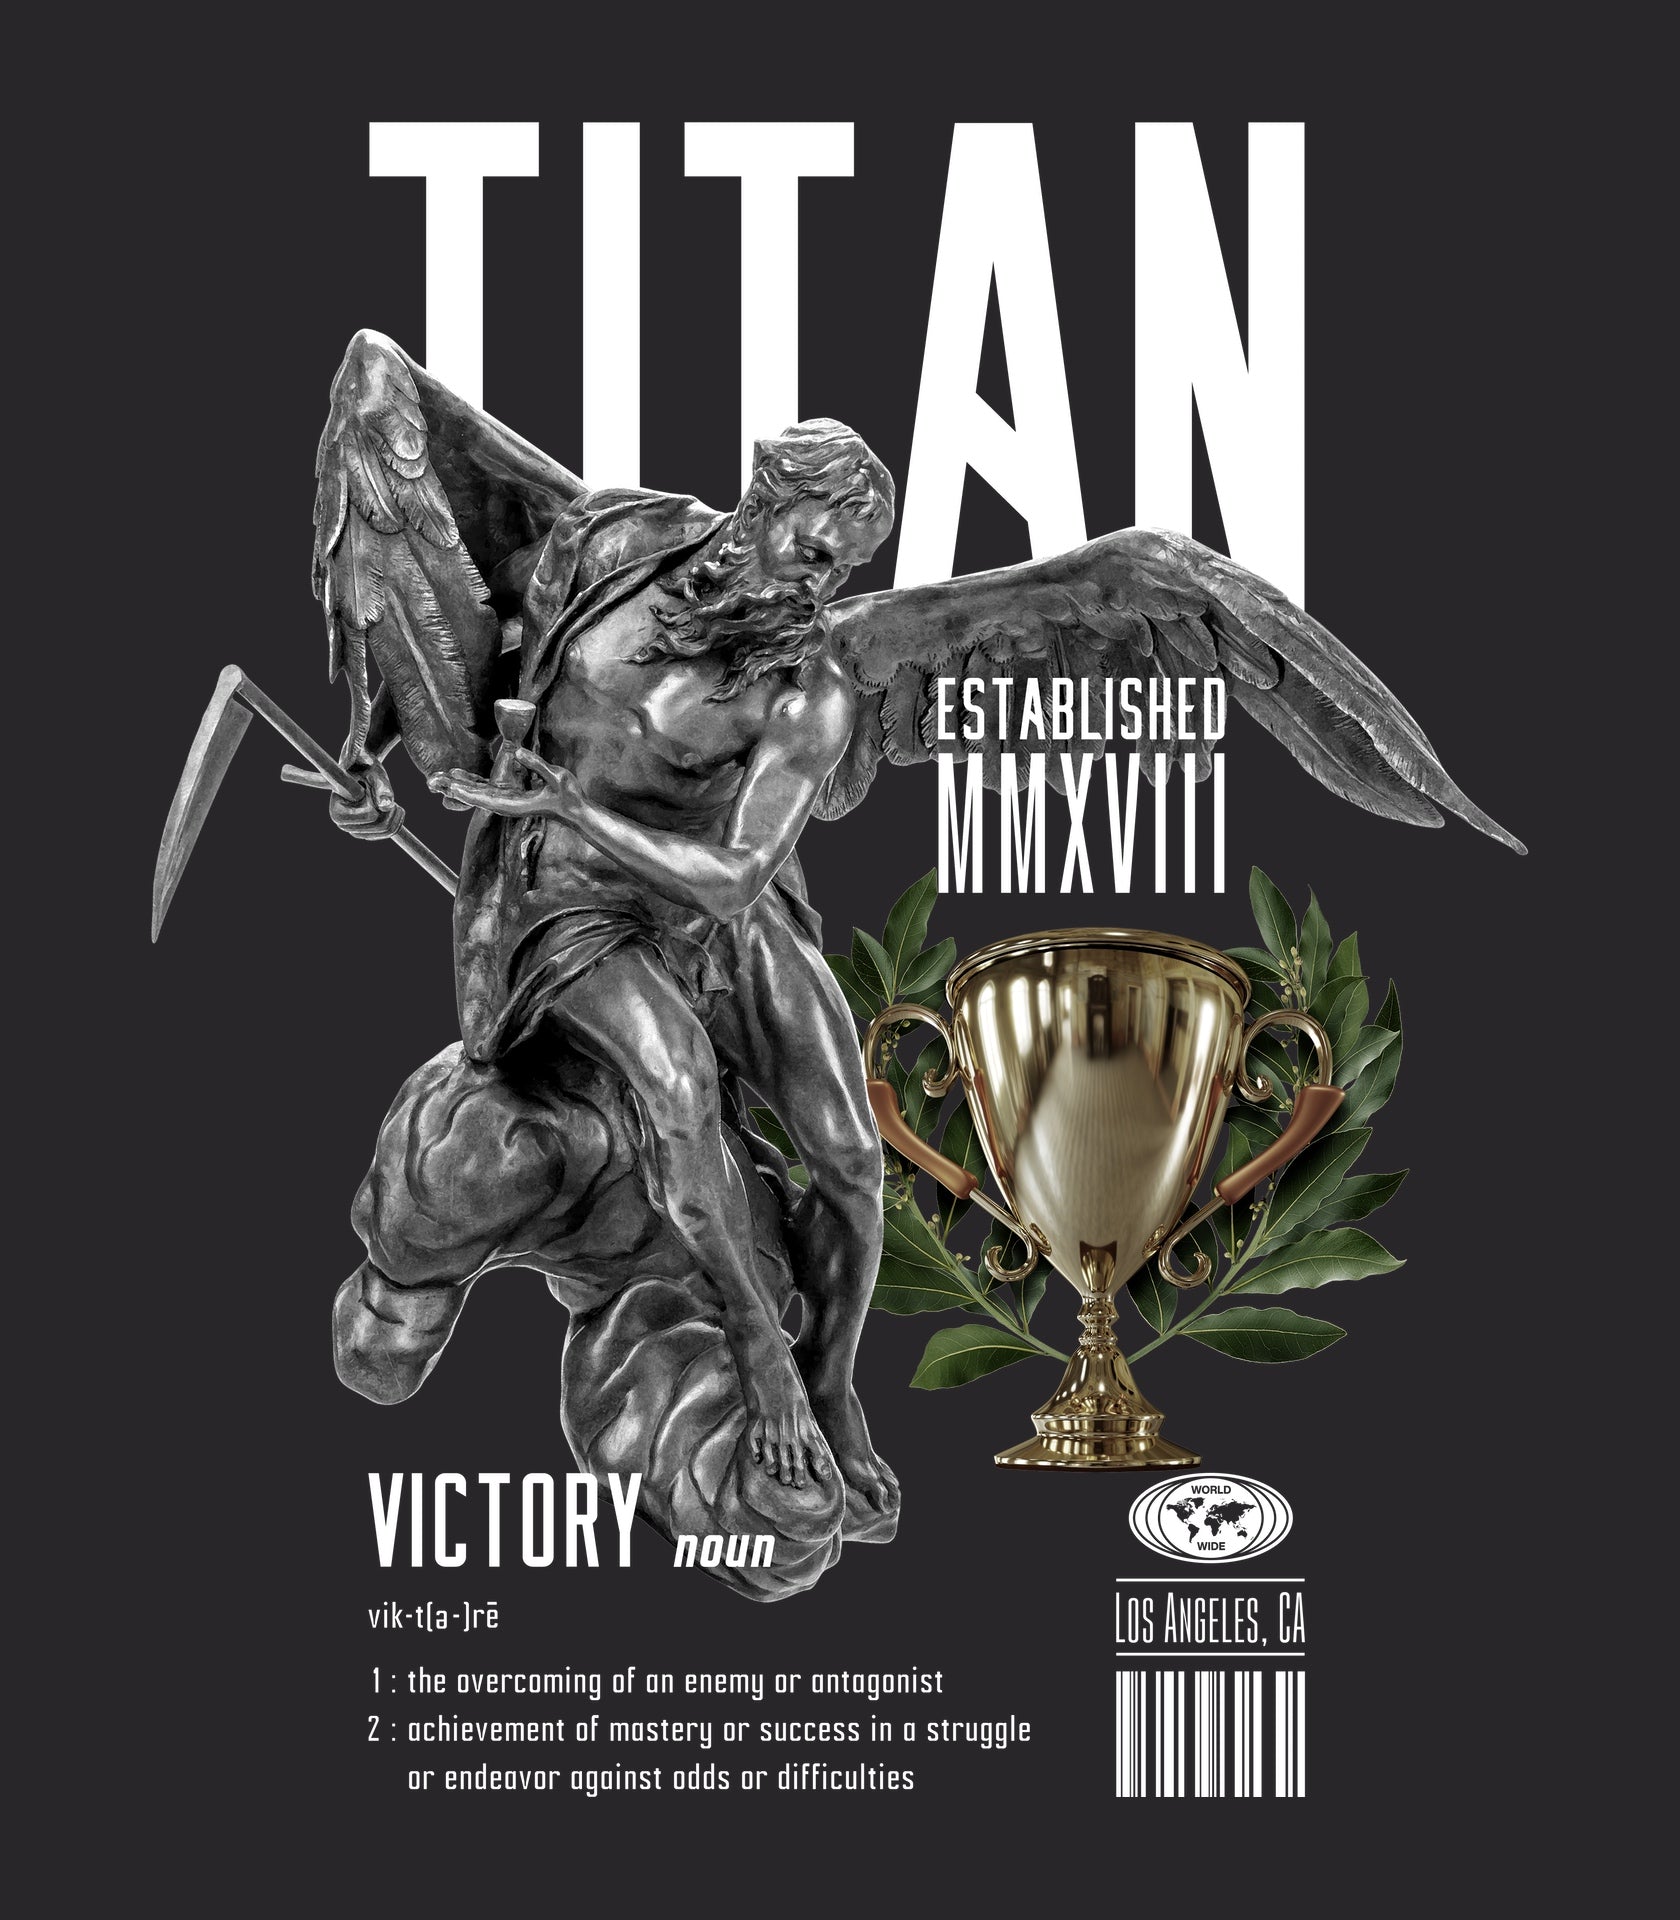 Victory Oversized Tee - Titan